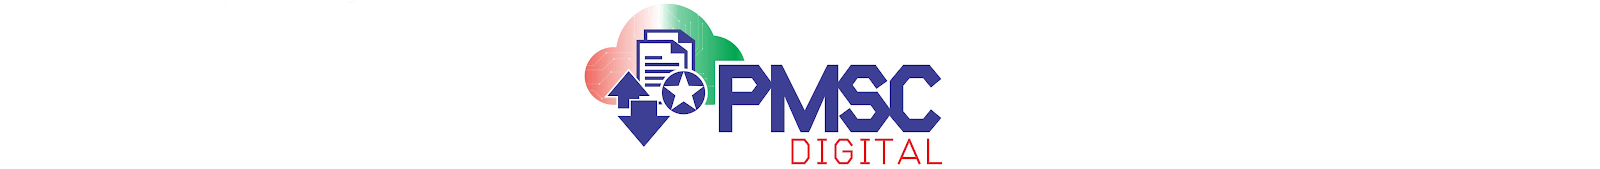 PMSC_Digital